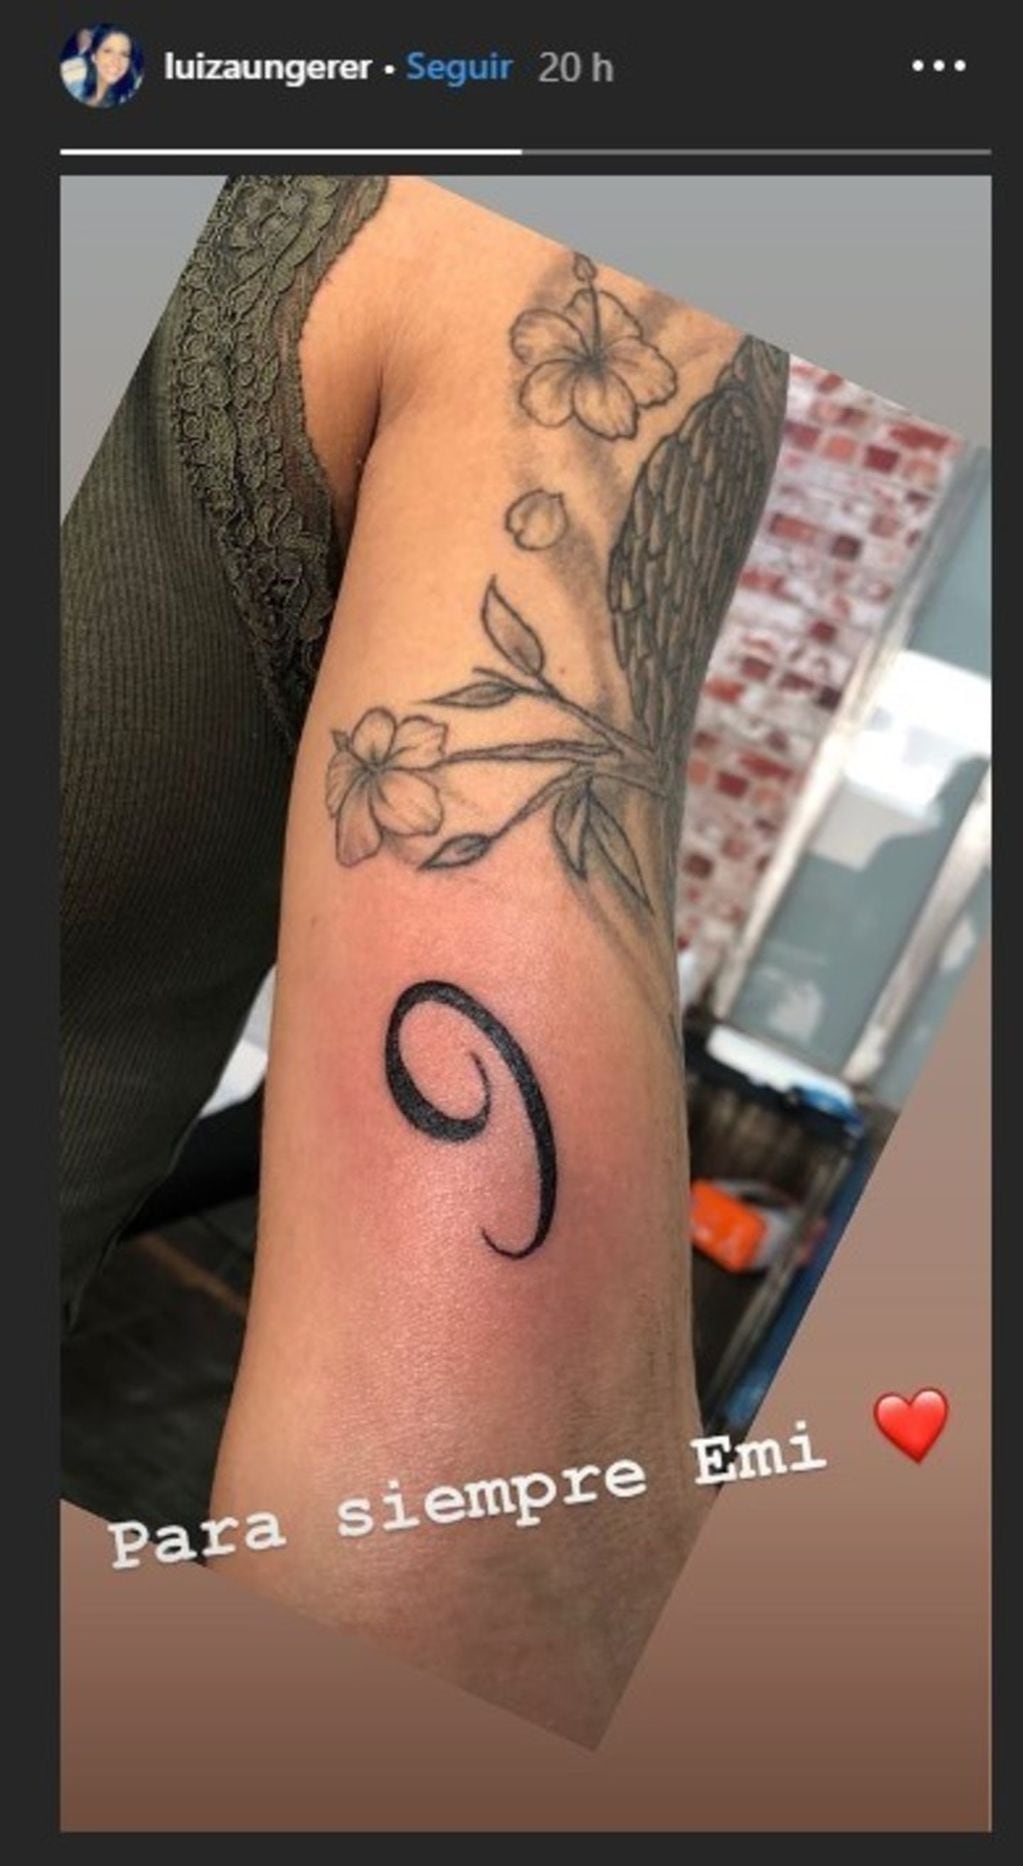 La brasileña Luiza Ungerer se hizo un tatuaje en memoria de Emiliano Sala, su pareja. Fotos: Instagram/luizaungerer